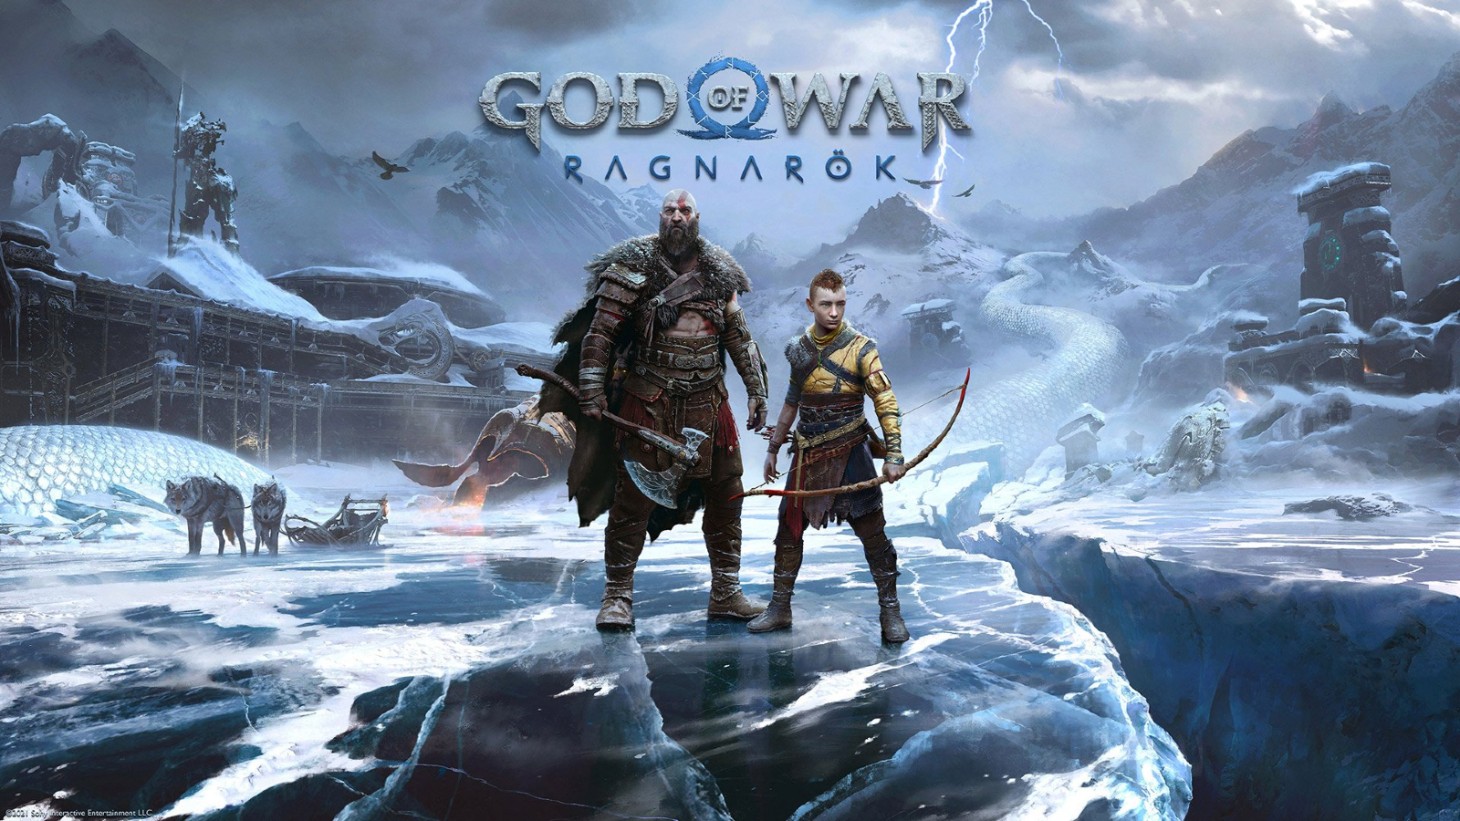 God of War Ragnarök comes to PC on September 19th